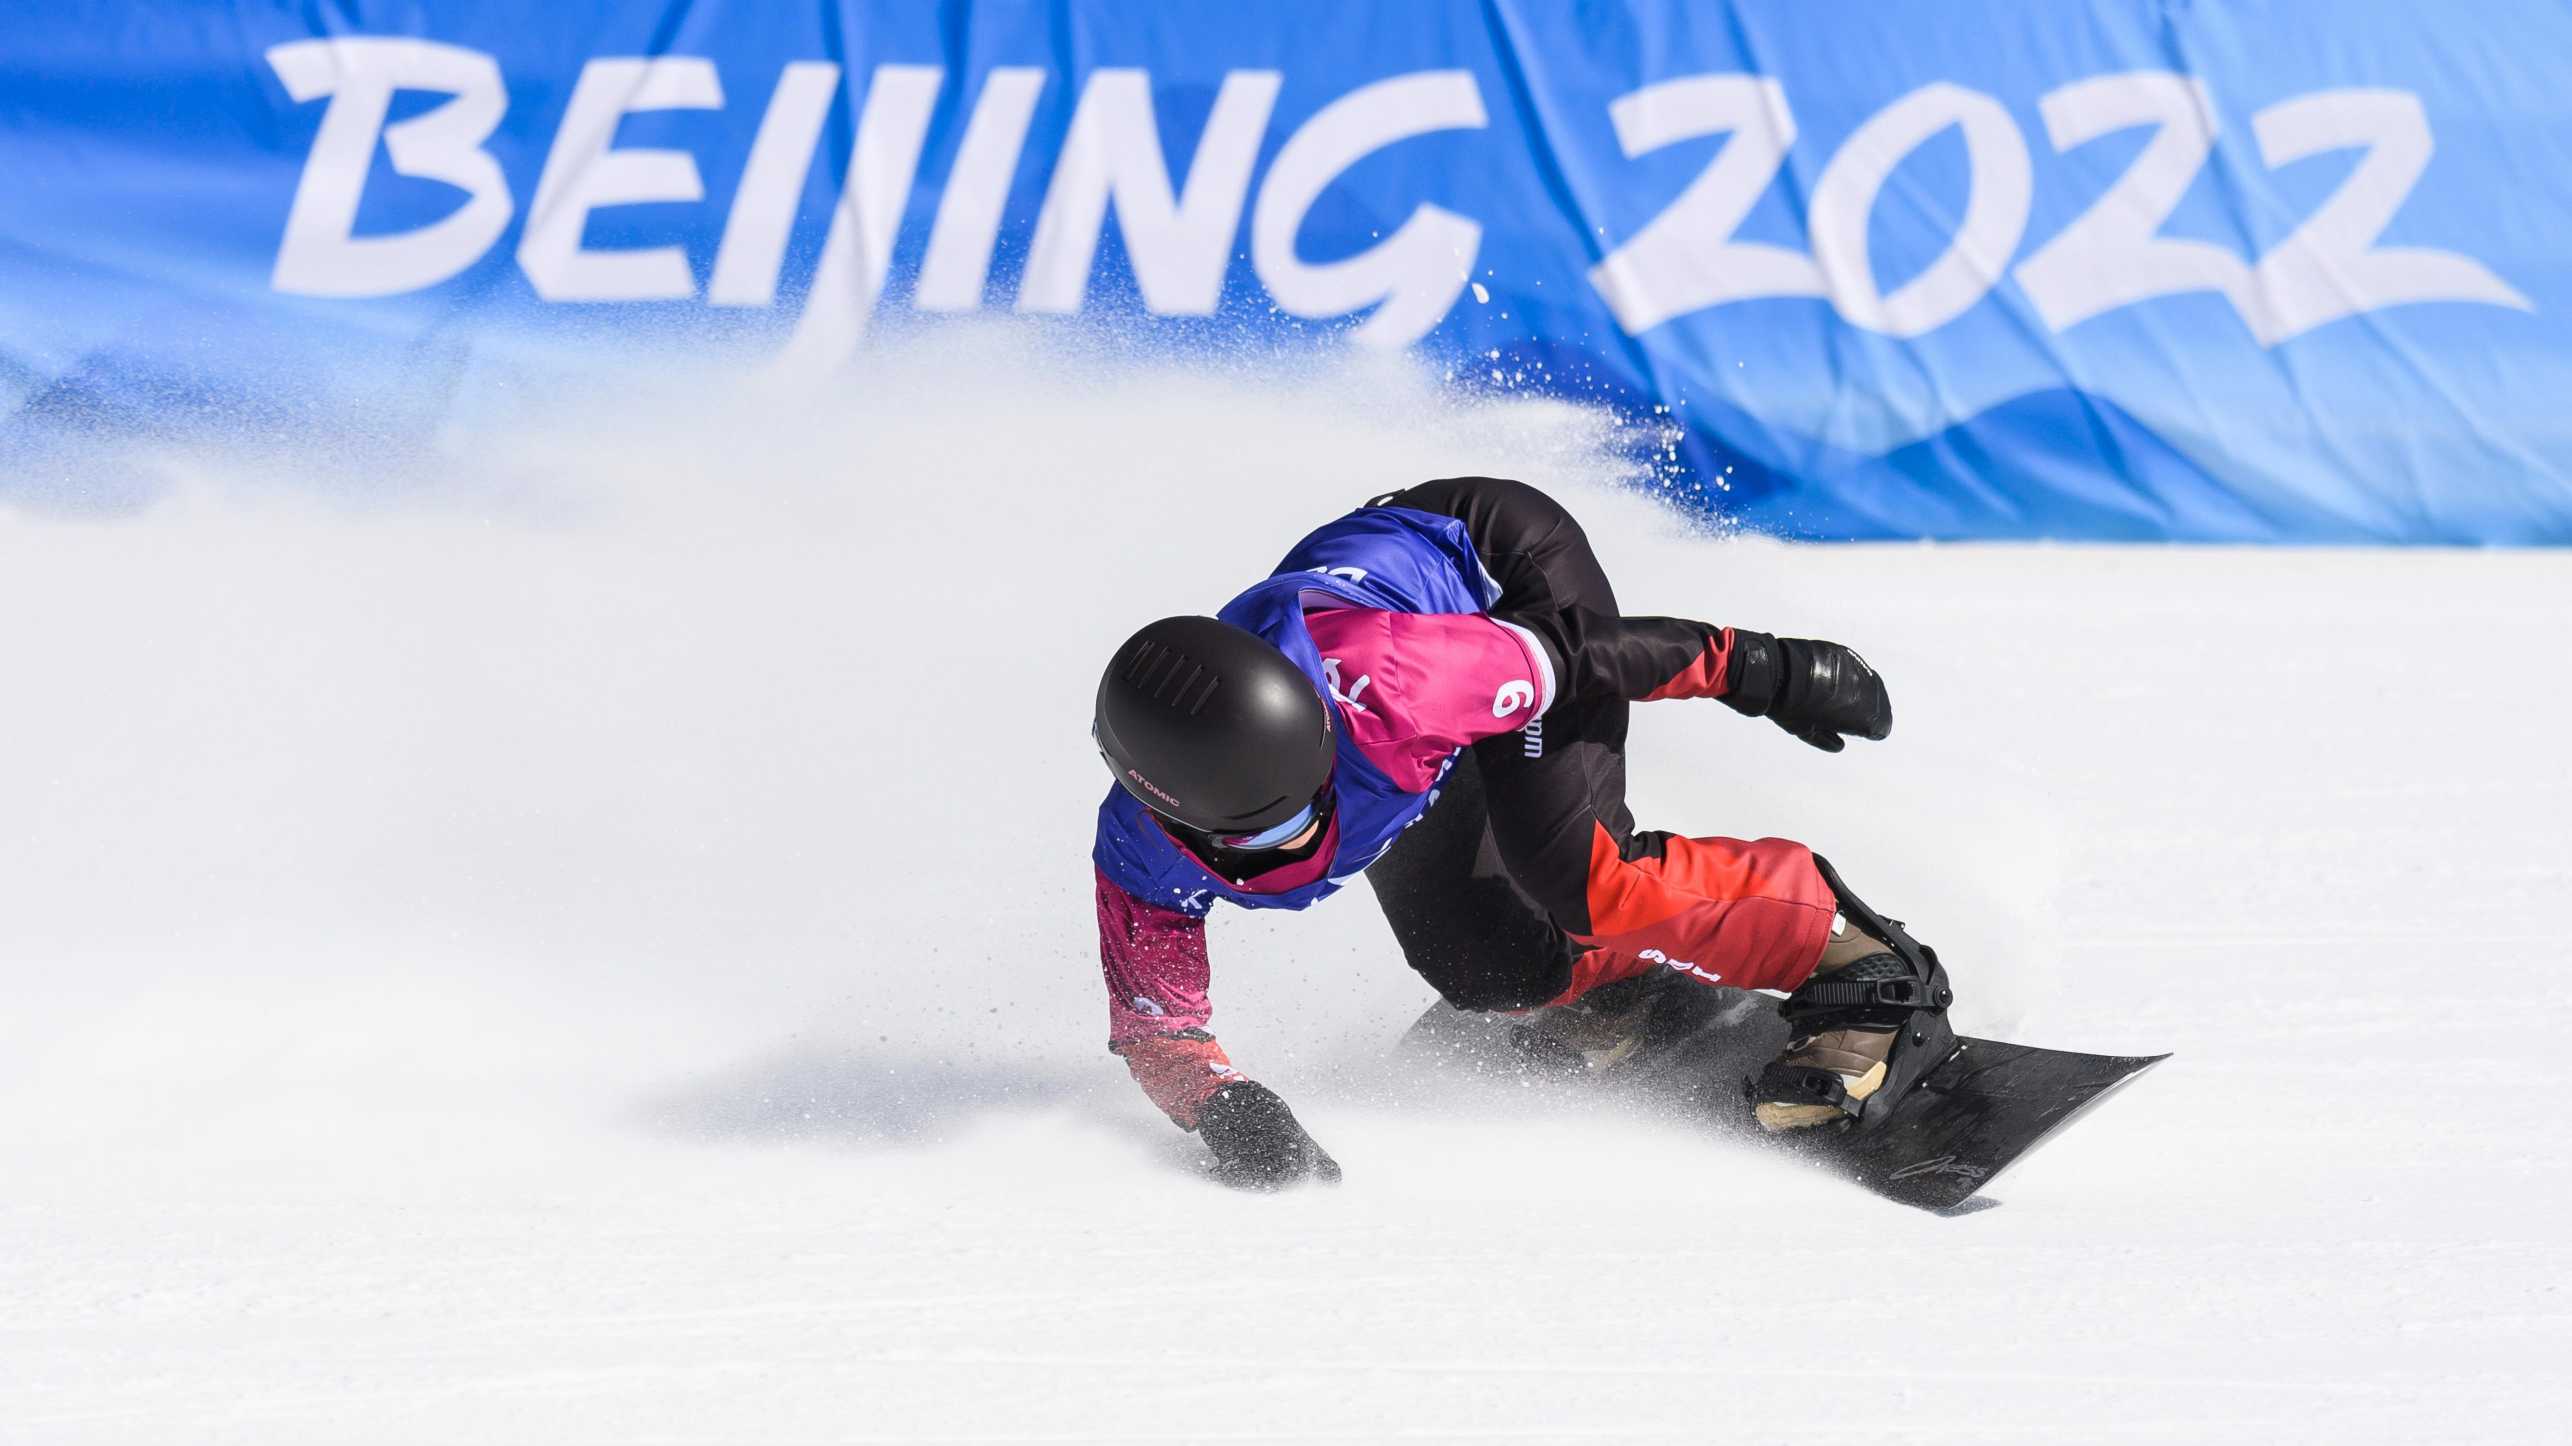 Enlarged view: Romy Tschopp on snowboard at Beijing 2022